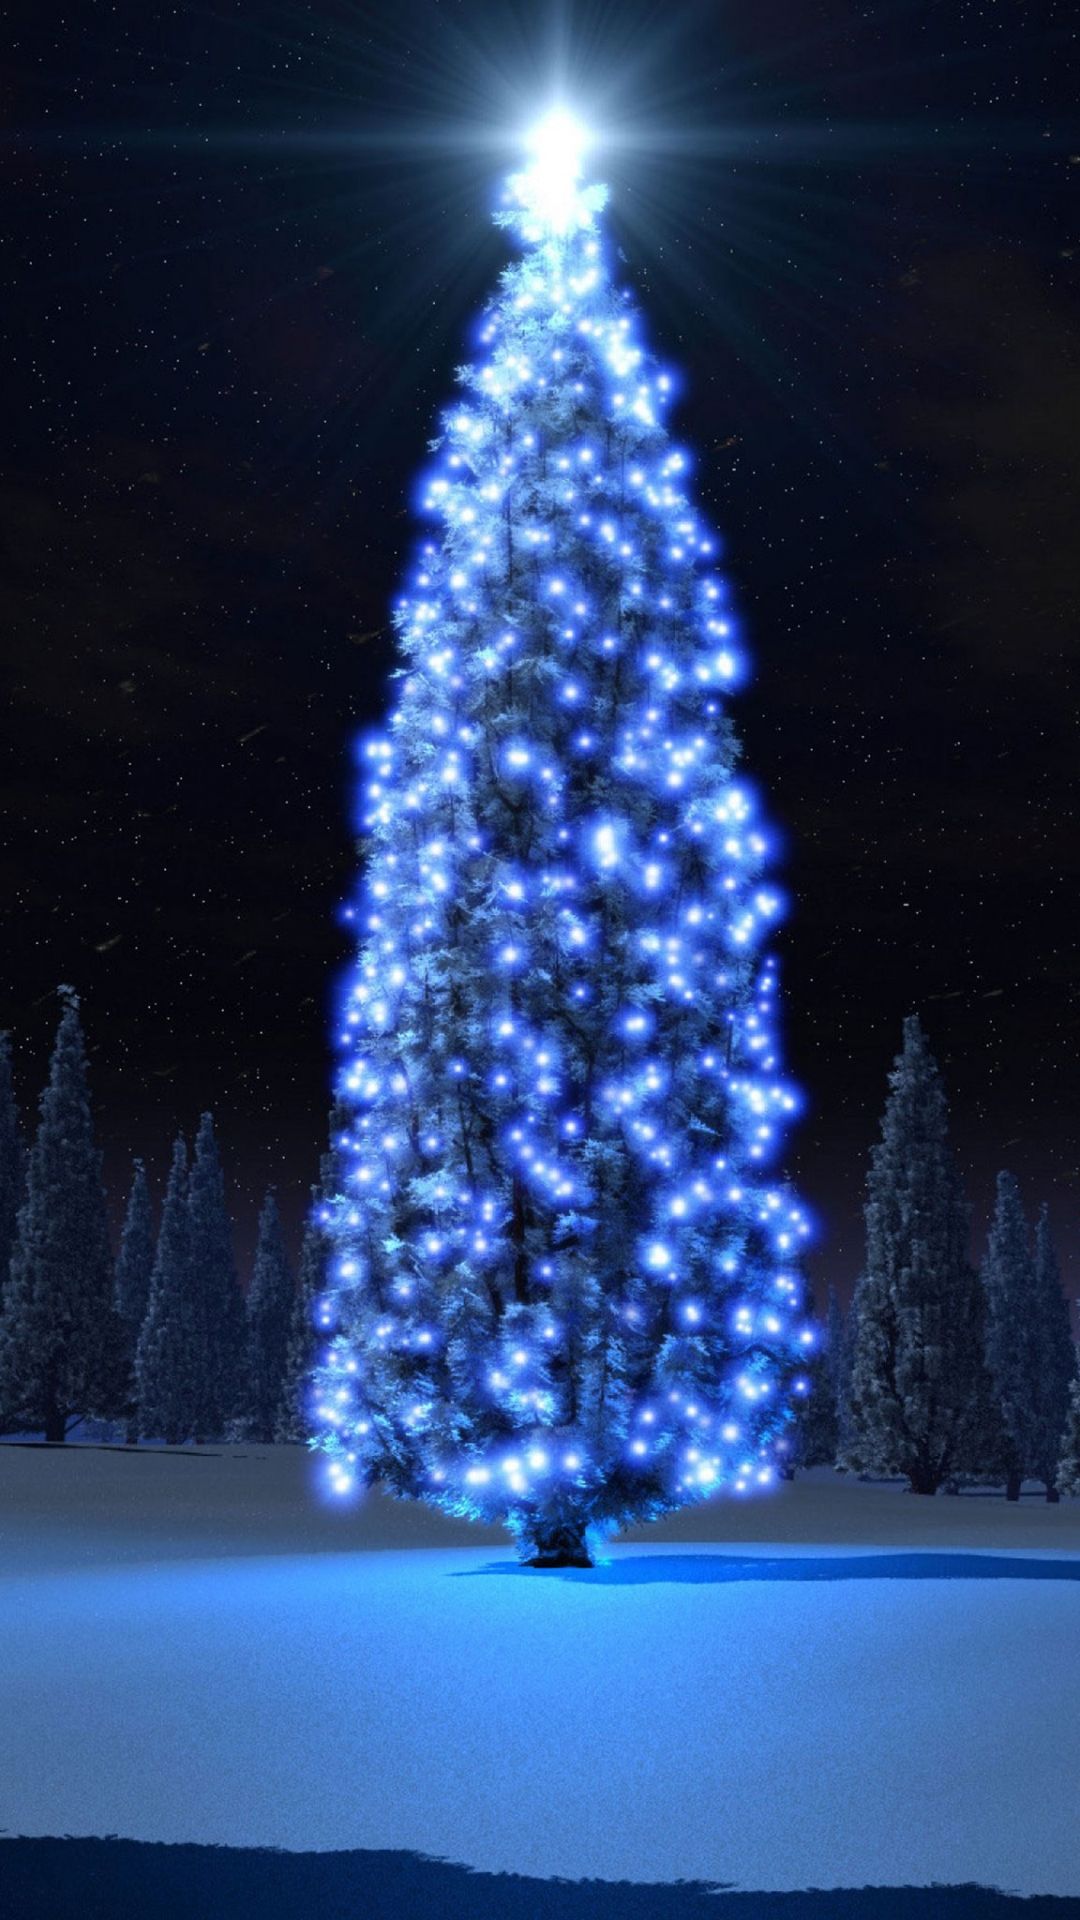 Aesthetic Christmas iPhone Background. Wallpaper iphone christmas, Christmas tree wallpaper, Blue christmas tree